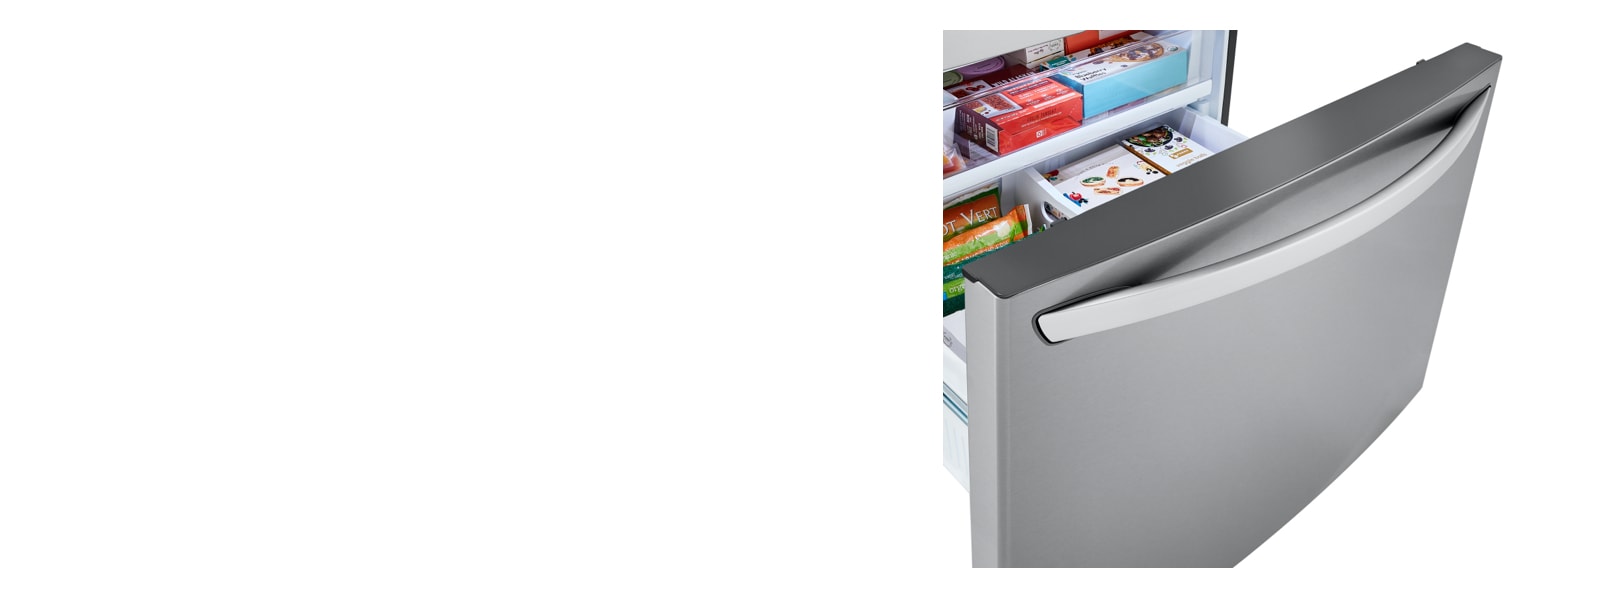 LRFWS2906D LG Appliances 29 cu ft. French Door Refrigerator with Slim  Design Water Dispenser BLACK STAINLESS STEEL - Metro Appliances & More